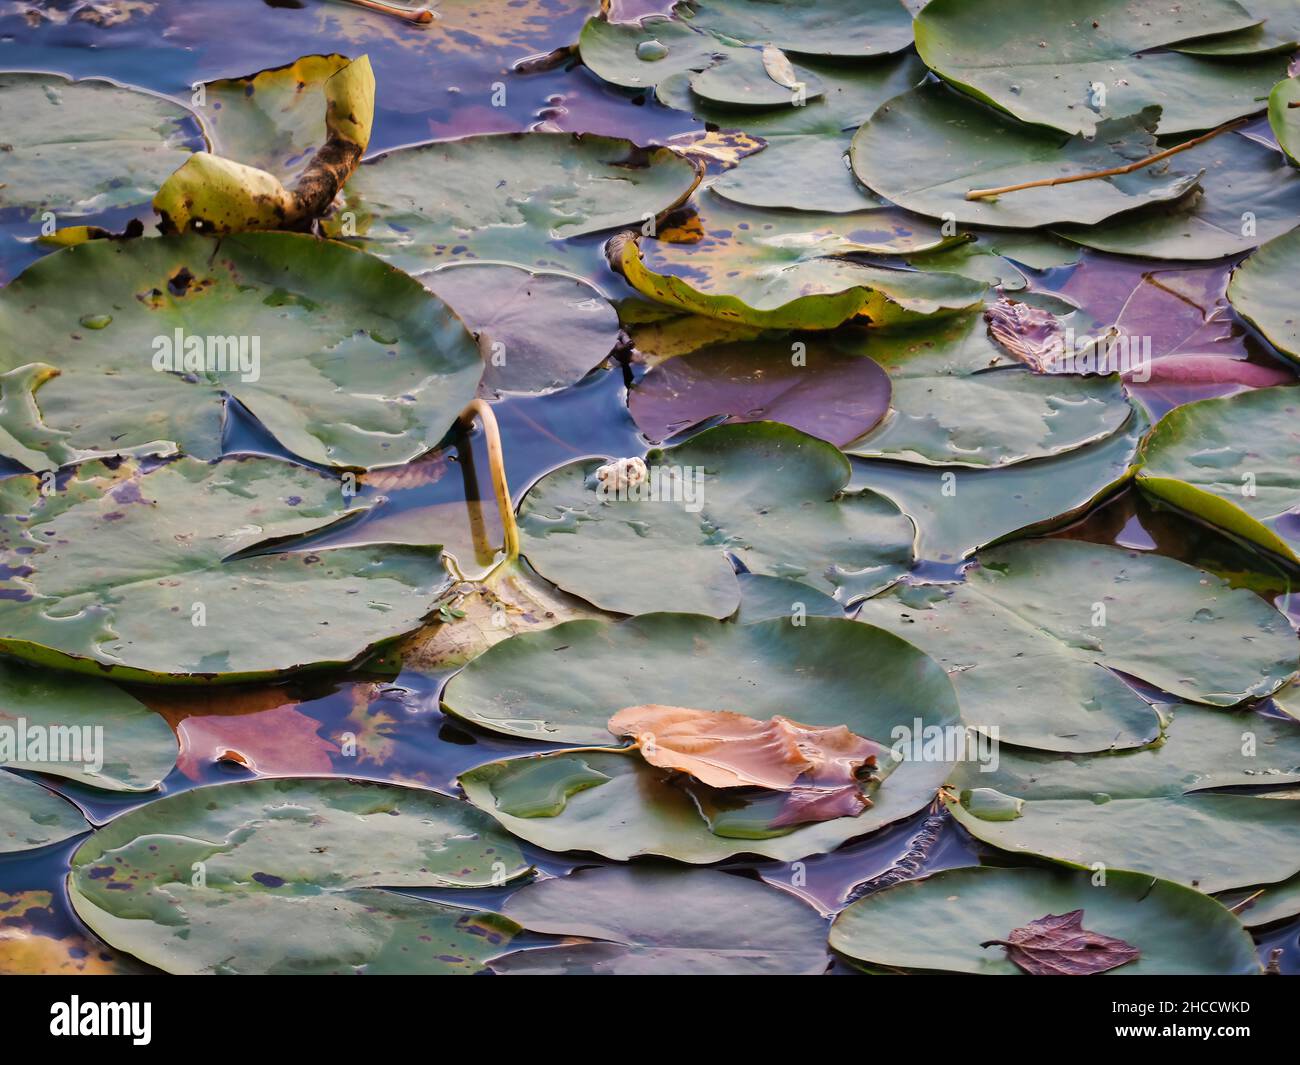 Lake full of colorful lotus leaves Stock Photo